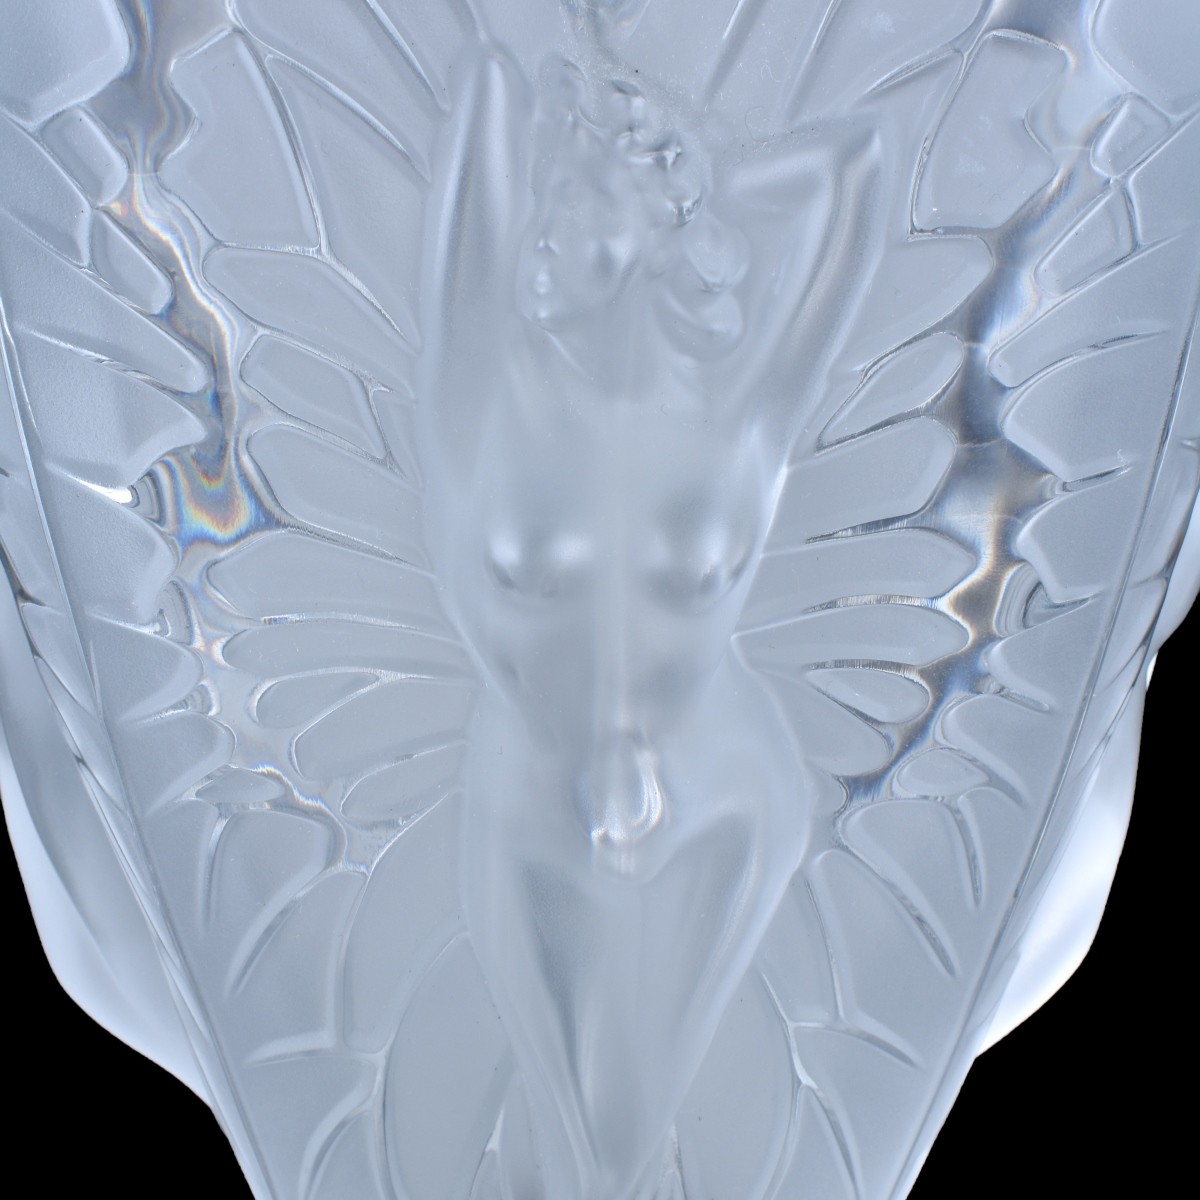 Lalique "Chrysalide" Crystal Vase